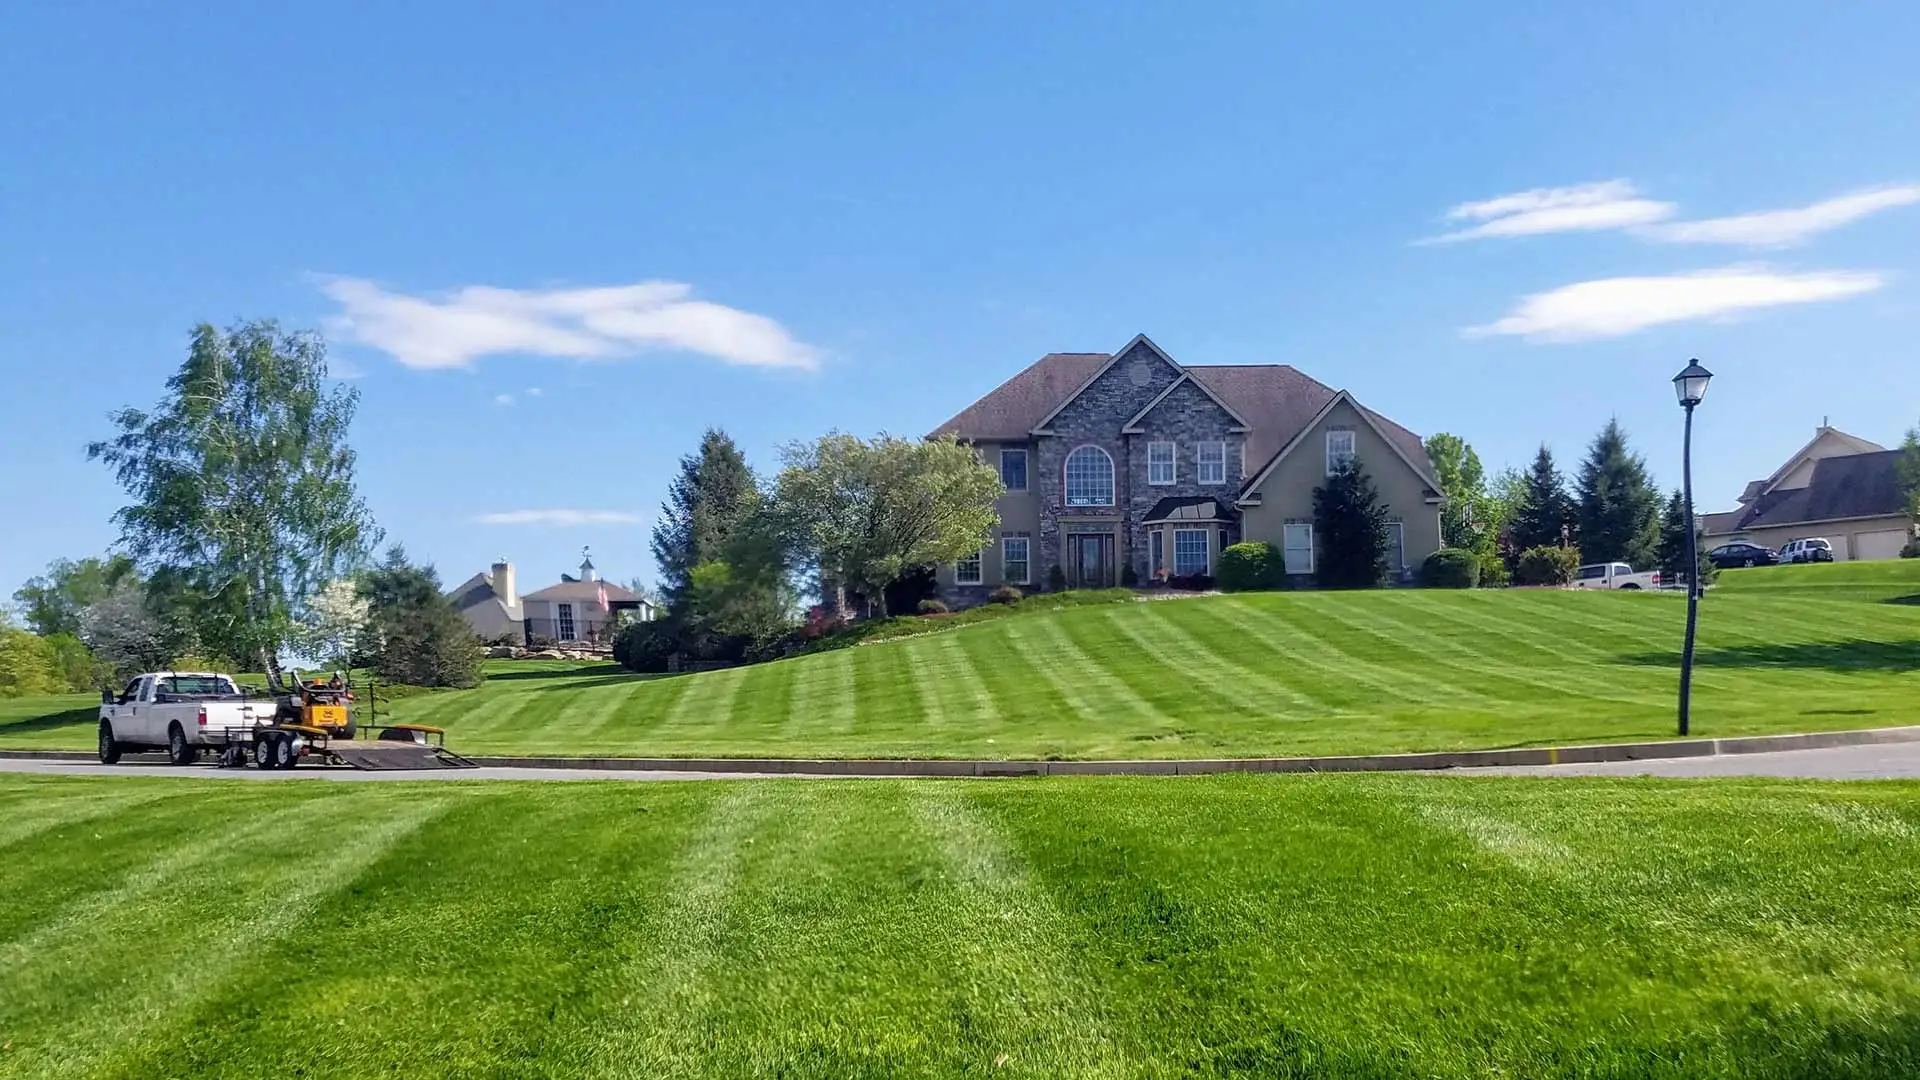 Beautiful, healthy home lawn near Macungie, Pennsylvania.